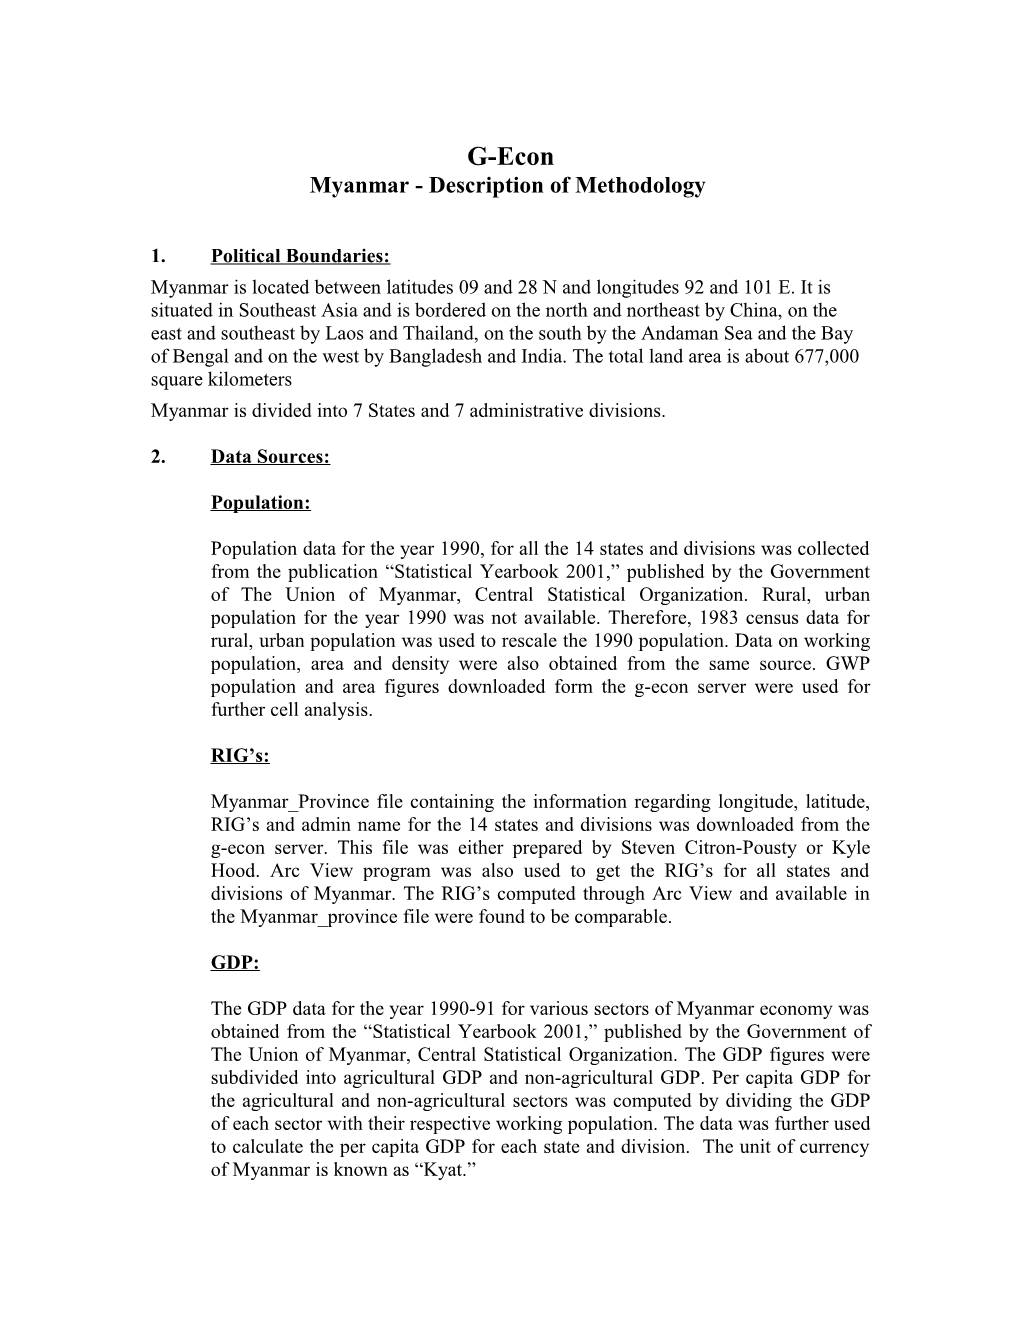 Myanmar- Description of Methodology